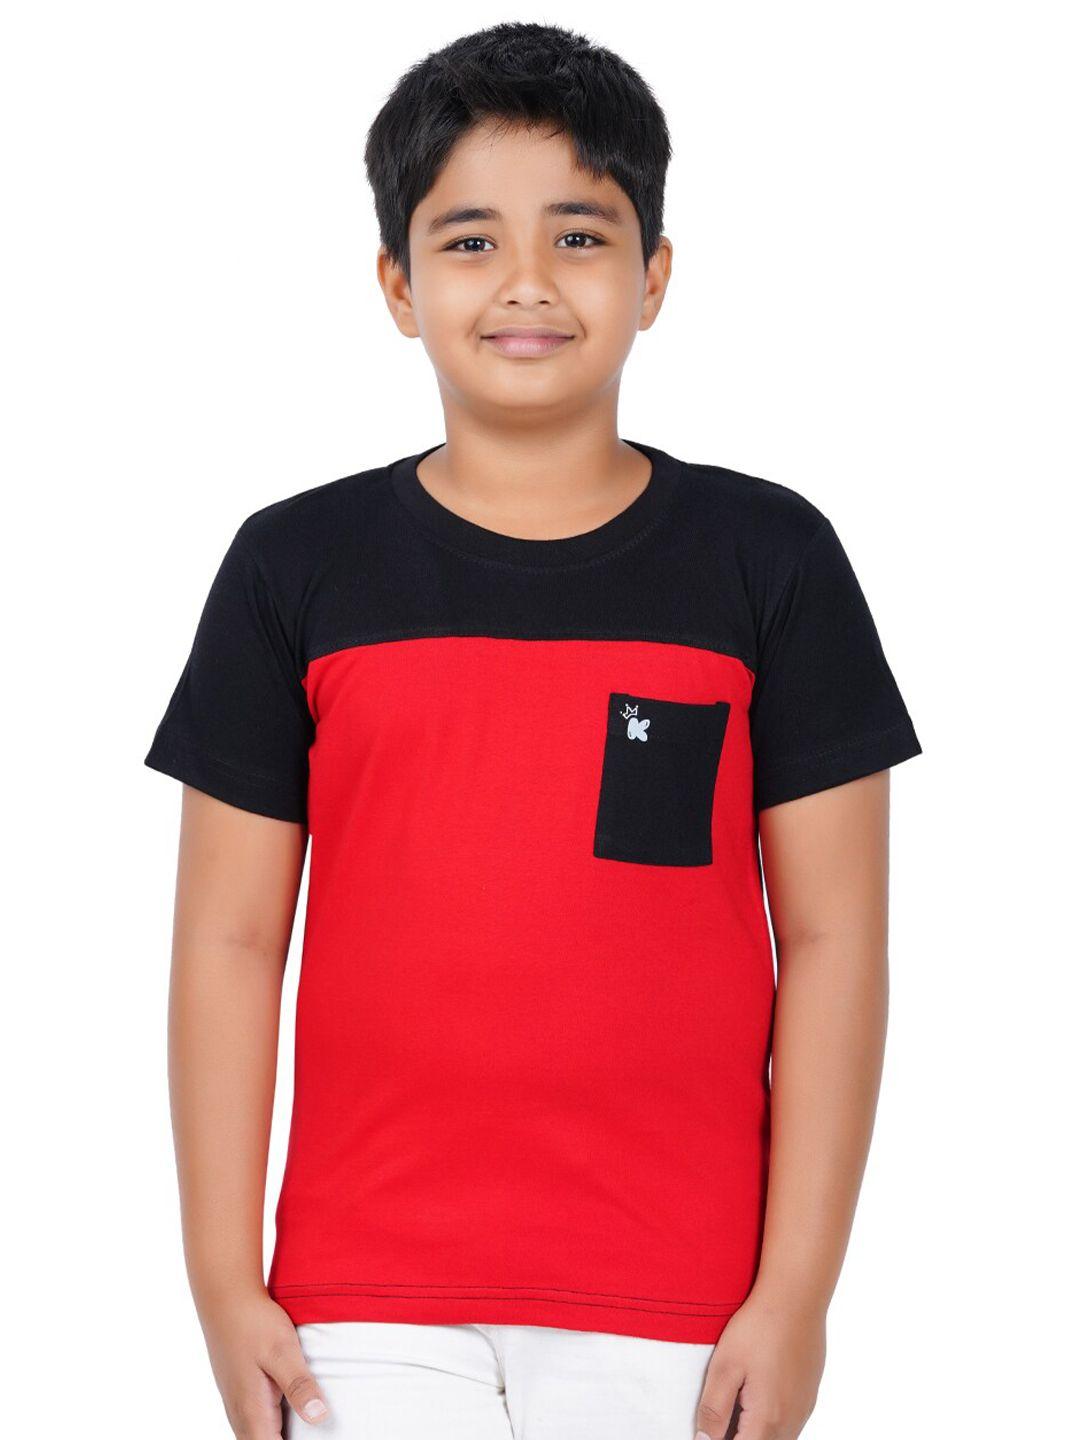 kiddeo boys red & black colourblocked pockets slim fit t-shirt